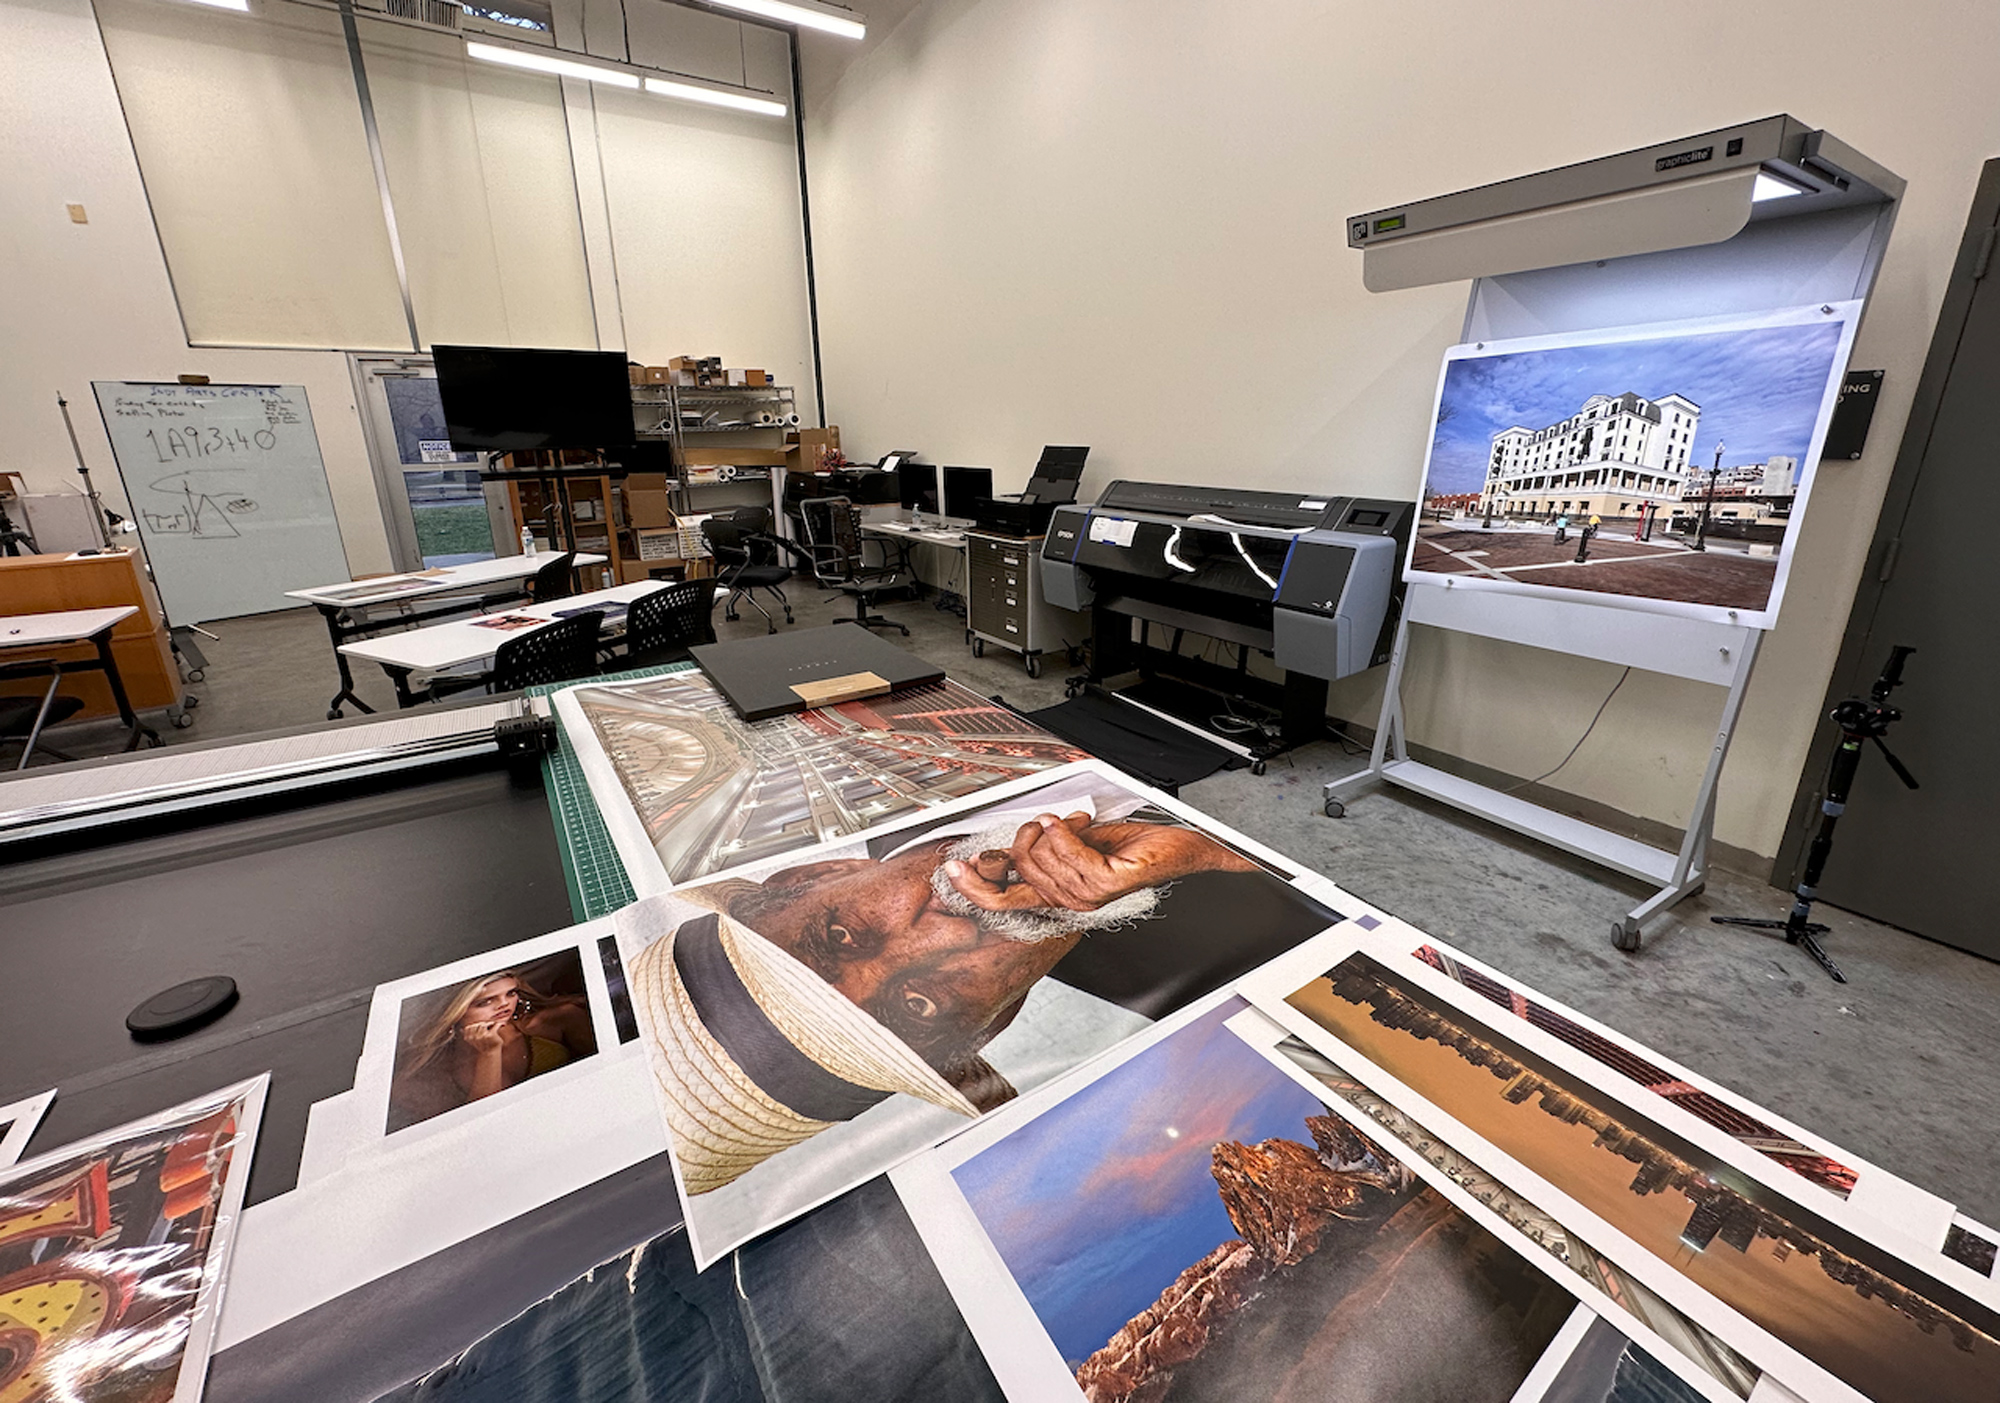 The Digital Imaging Studio at teh Indianapolis Art Center